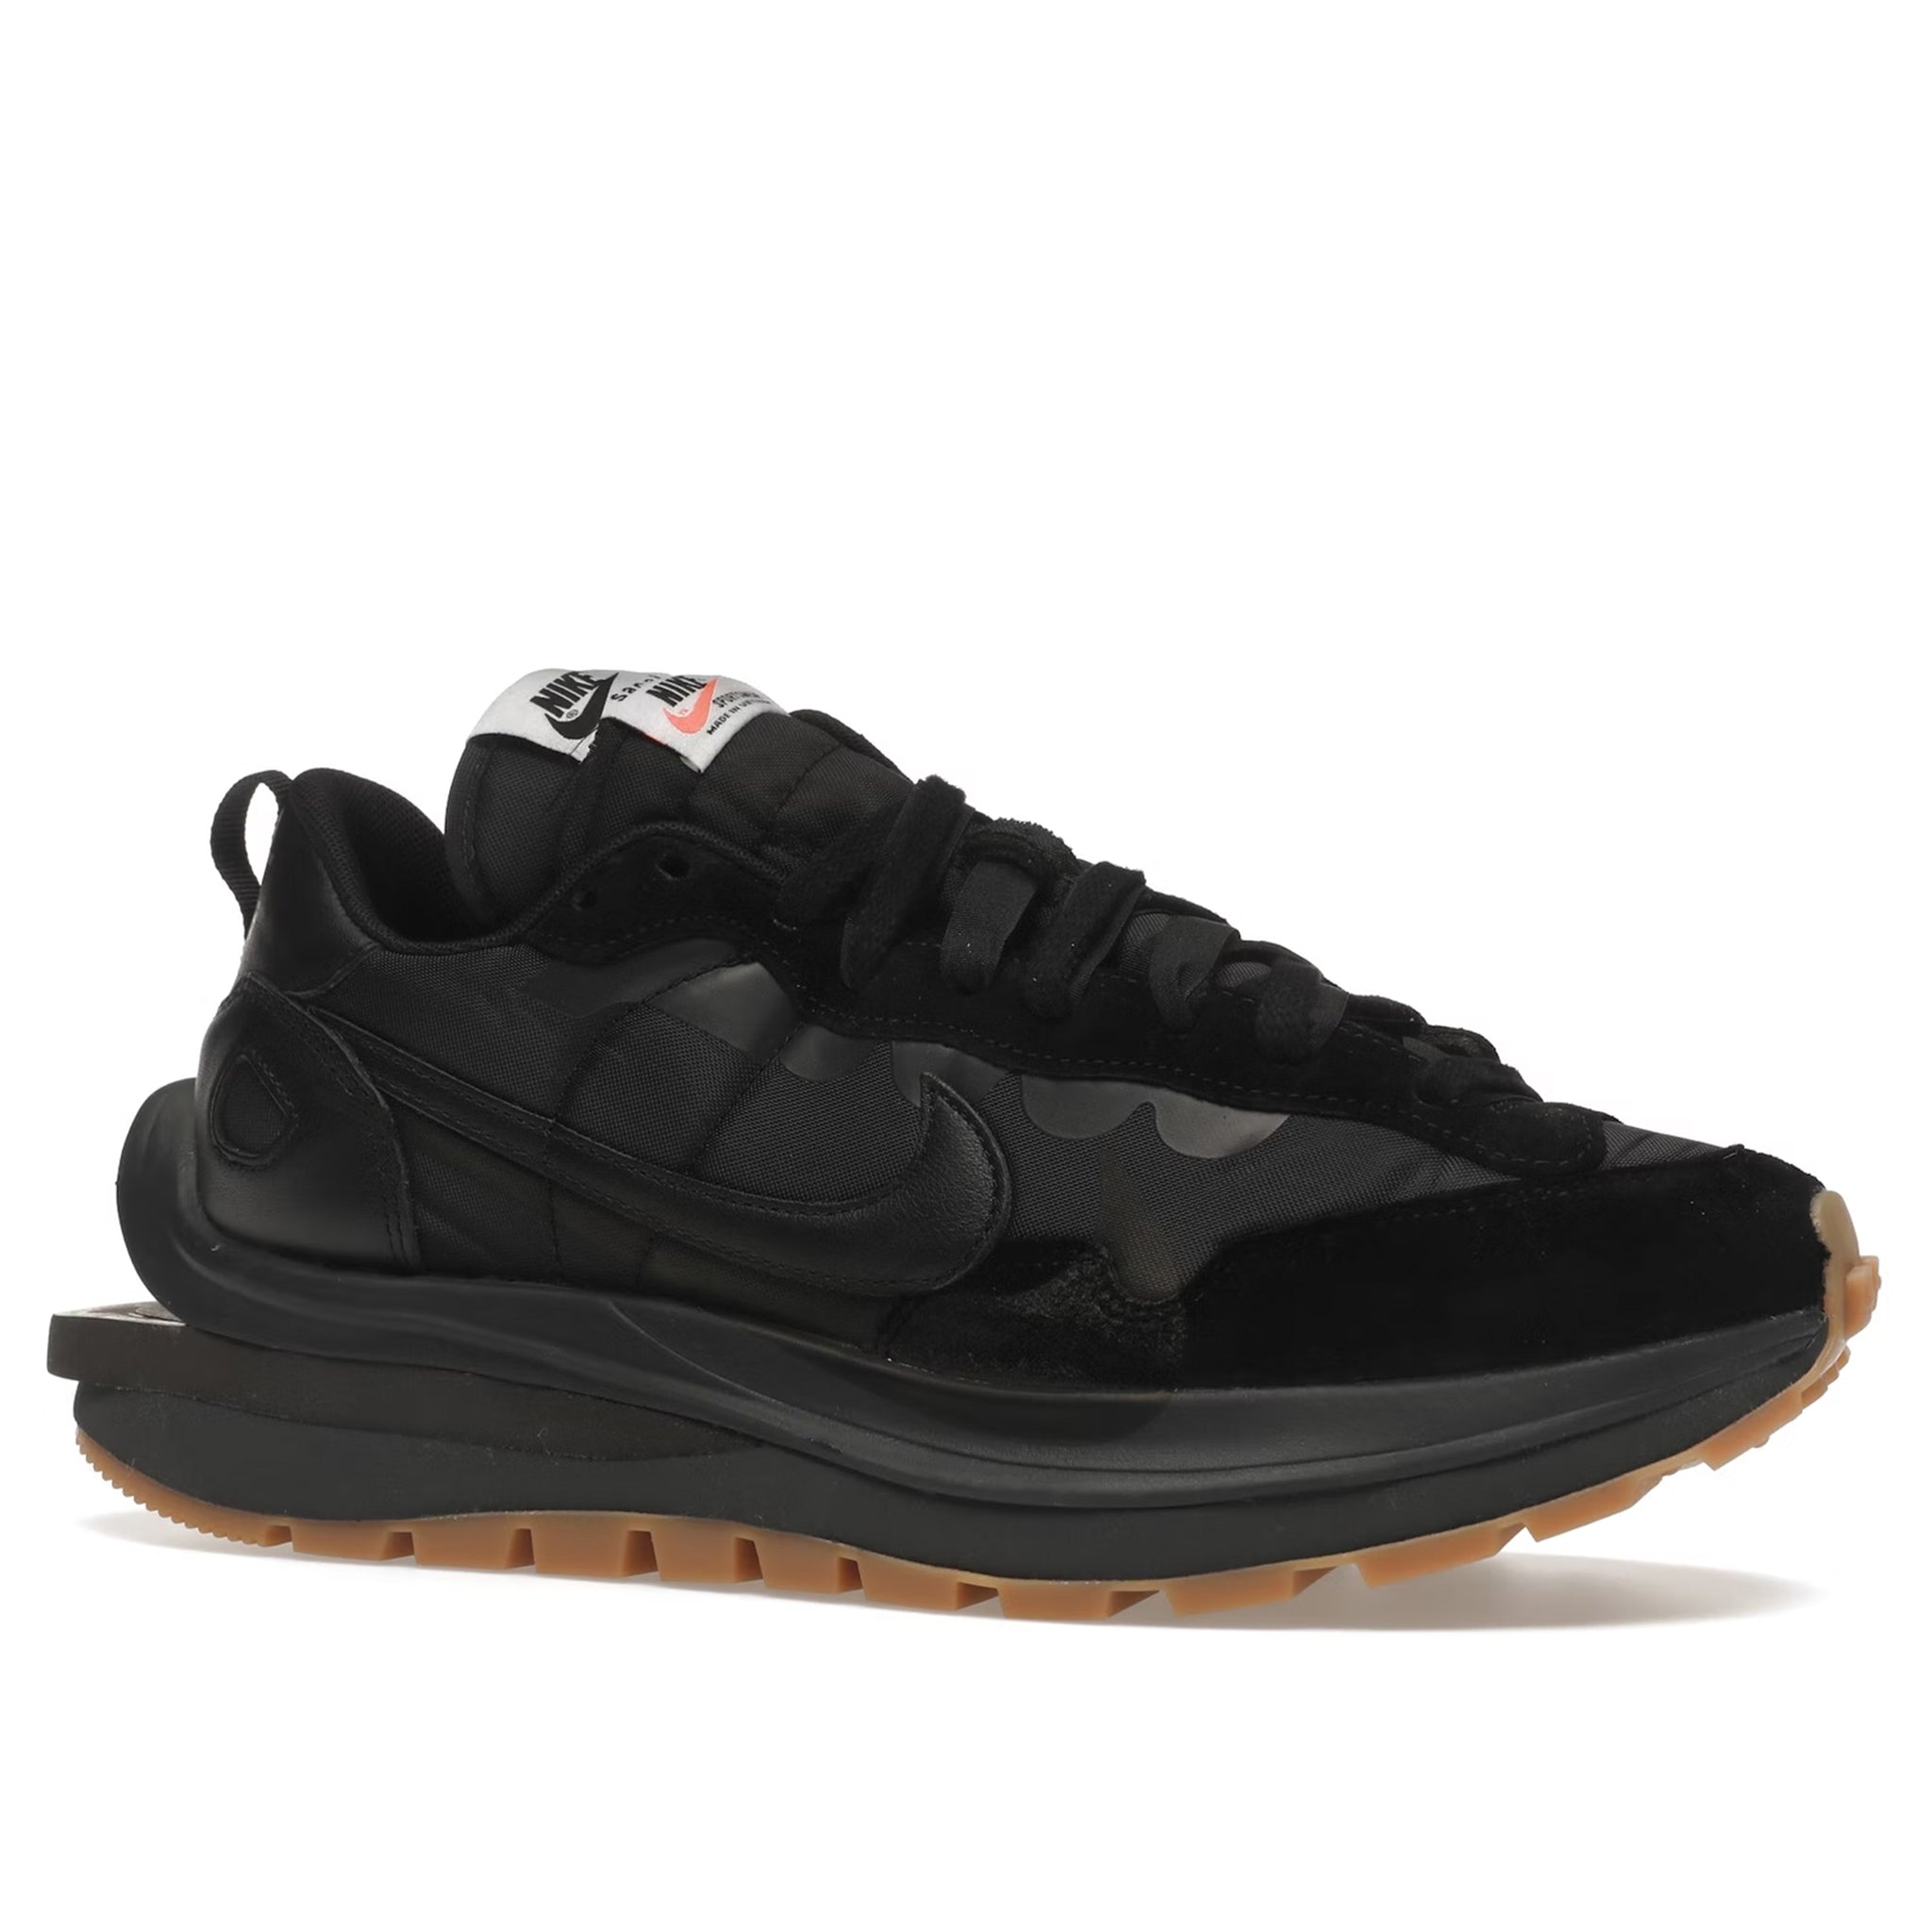 Image of Nike x Sacai Vaporwaffle Black Gum Sneaker